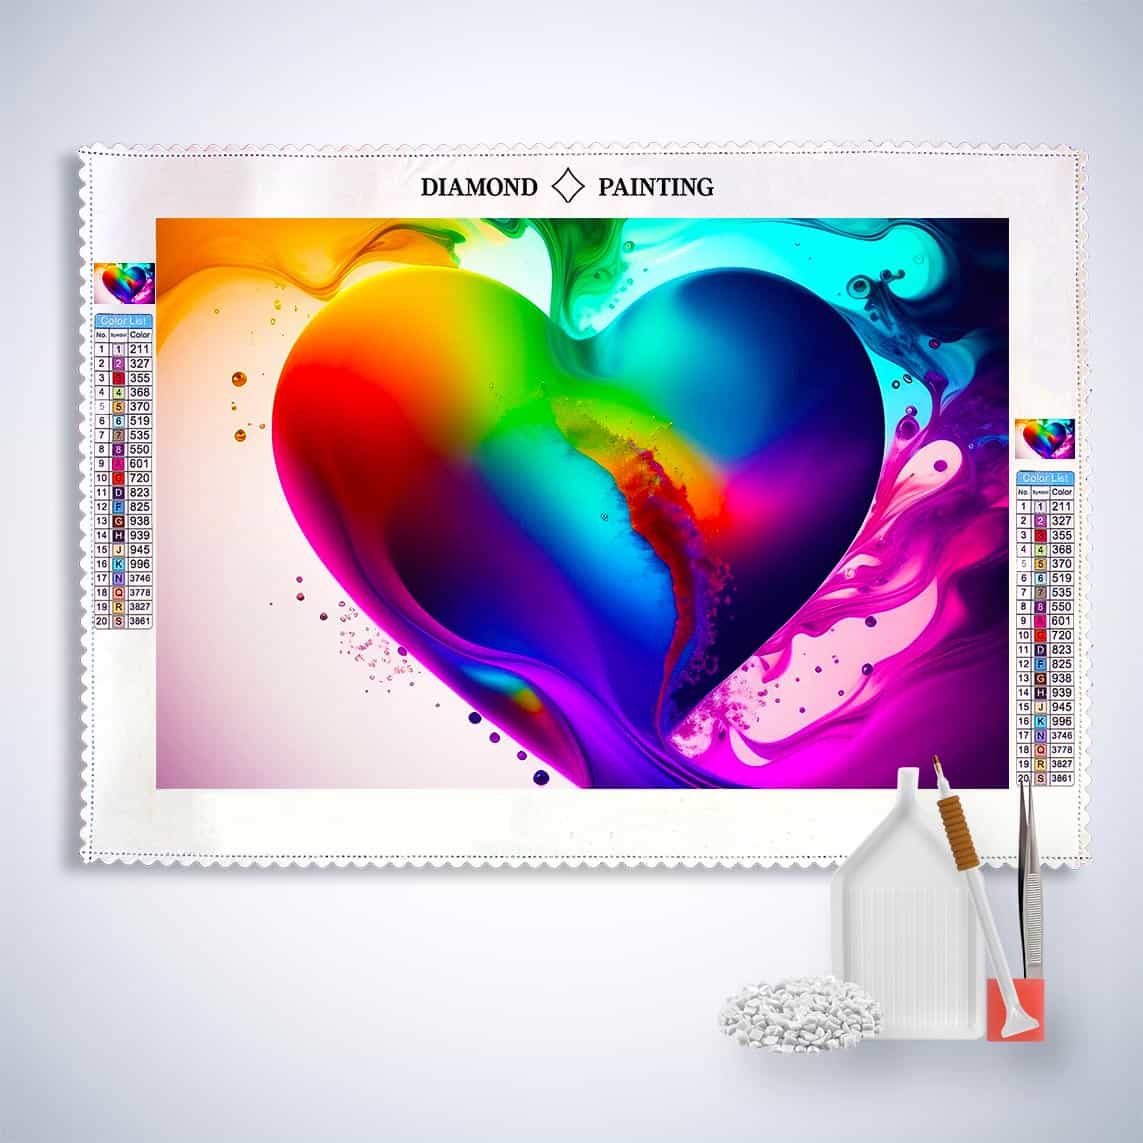 Diamond Painting - Farbwolke, Herz - gedruckt in Ultra-HD - Abstrakt, Herz, Horizontal, Liebe